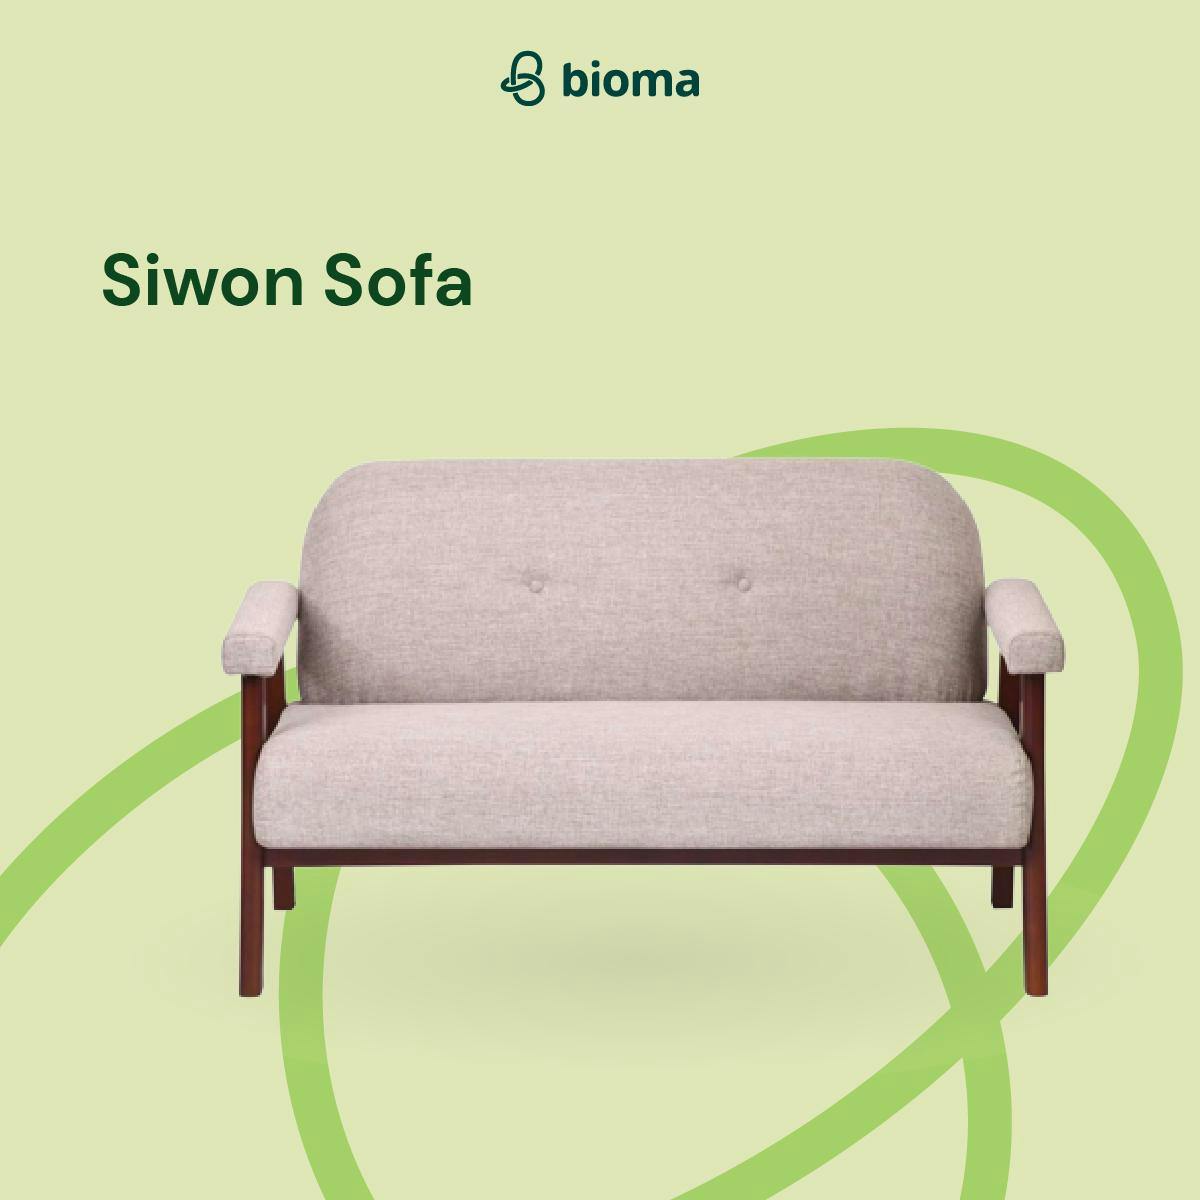 Siwon Sofa